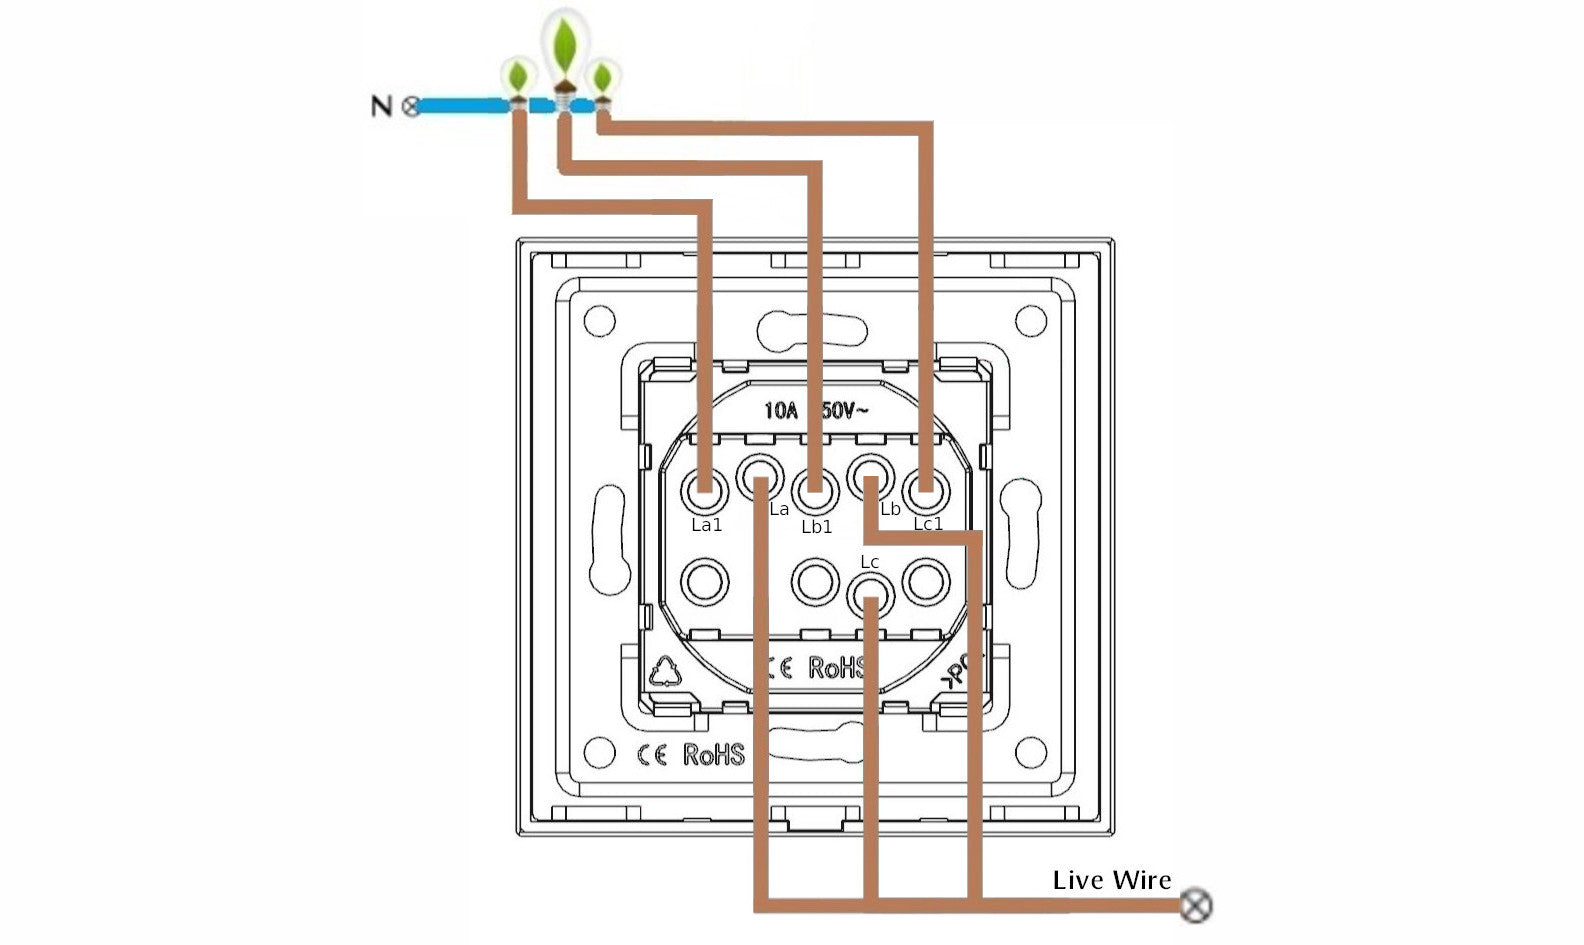 Interruptor mecánico de tres cuadros con dos enchufes (blanco, plástico)